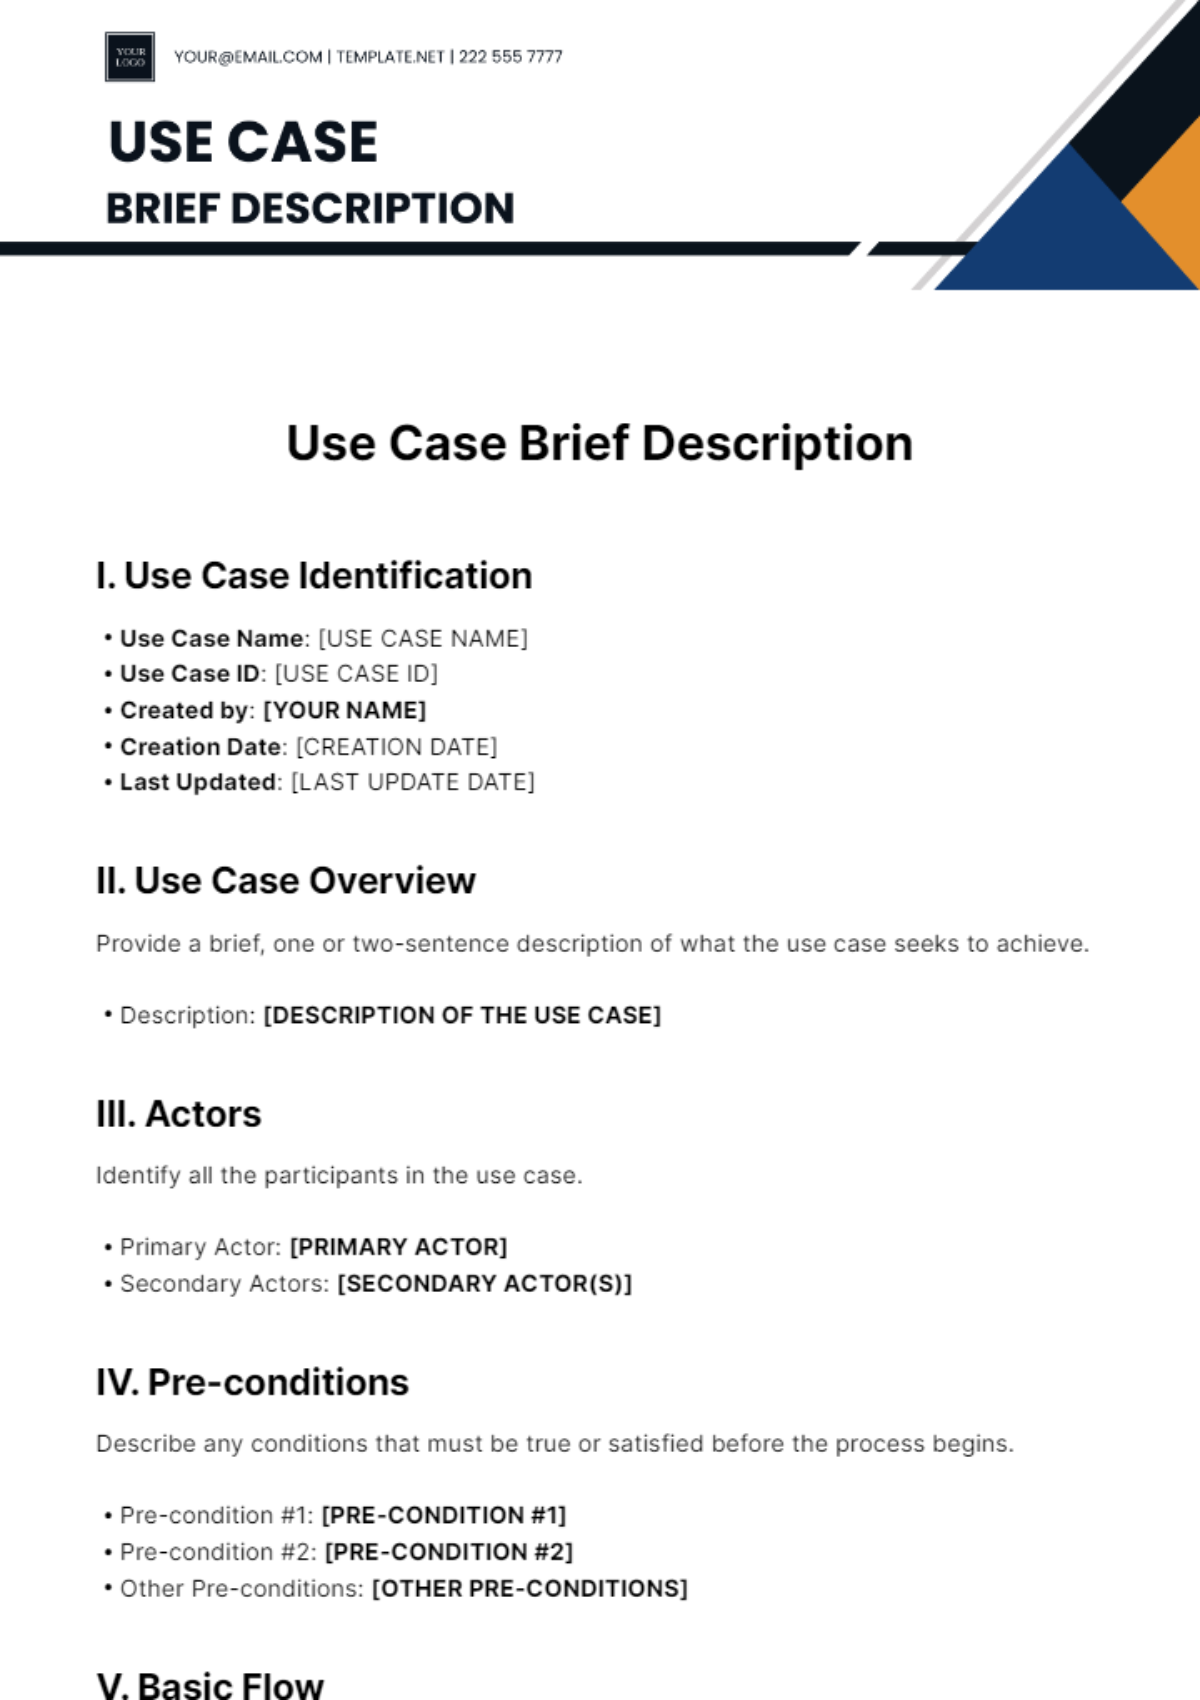 Use Case Brief Description Template